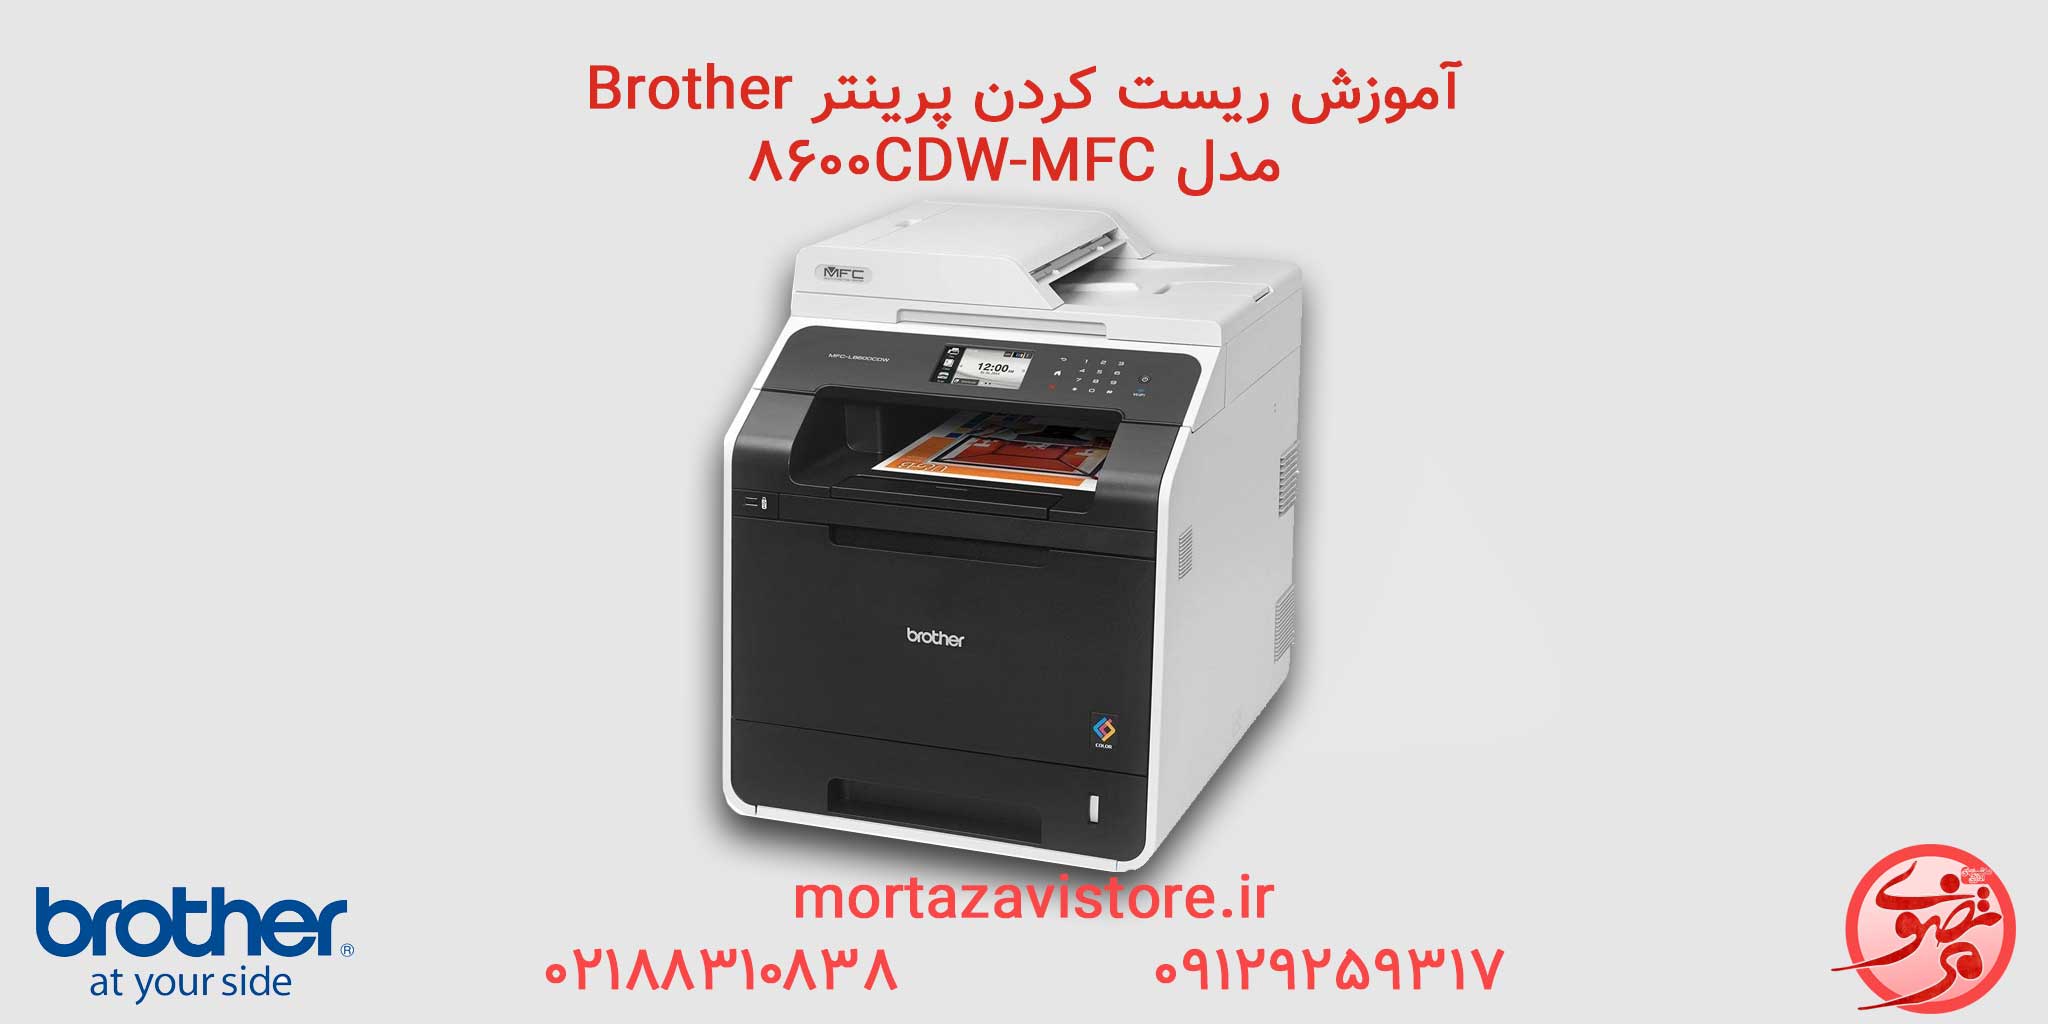 BROTHER-MFC-8600CDW | آموزش ریست پرینتر برادر مدل mfc 8600CDW